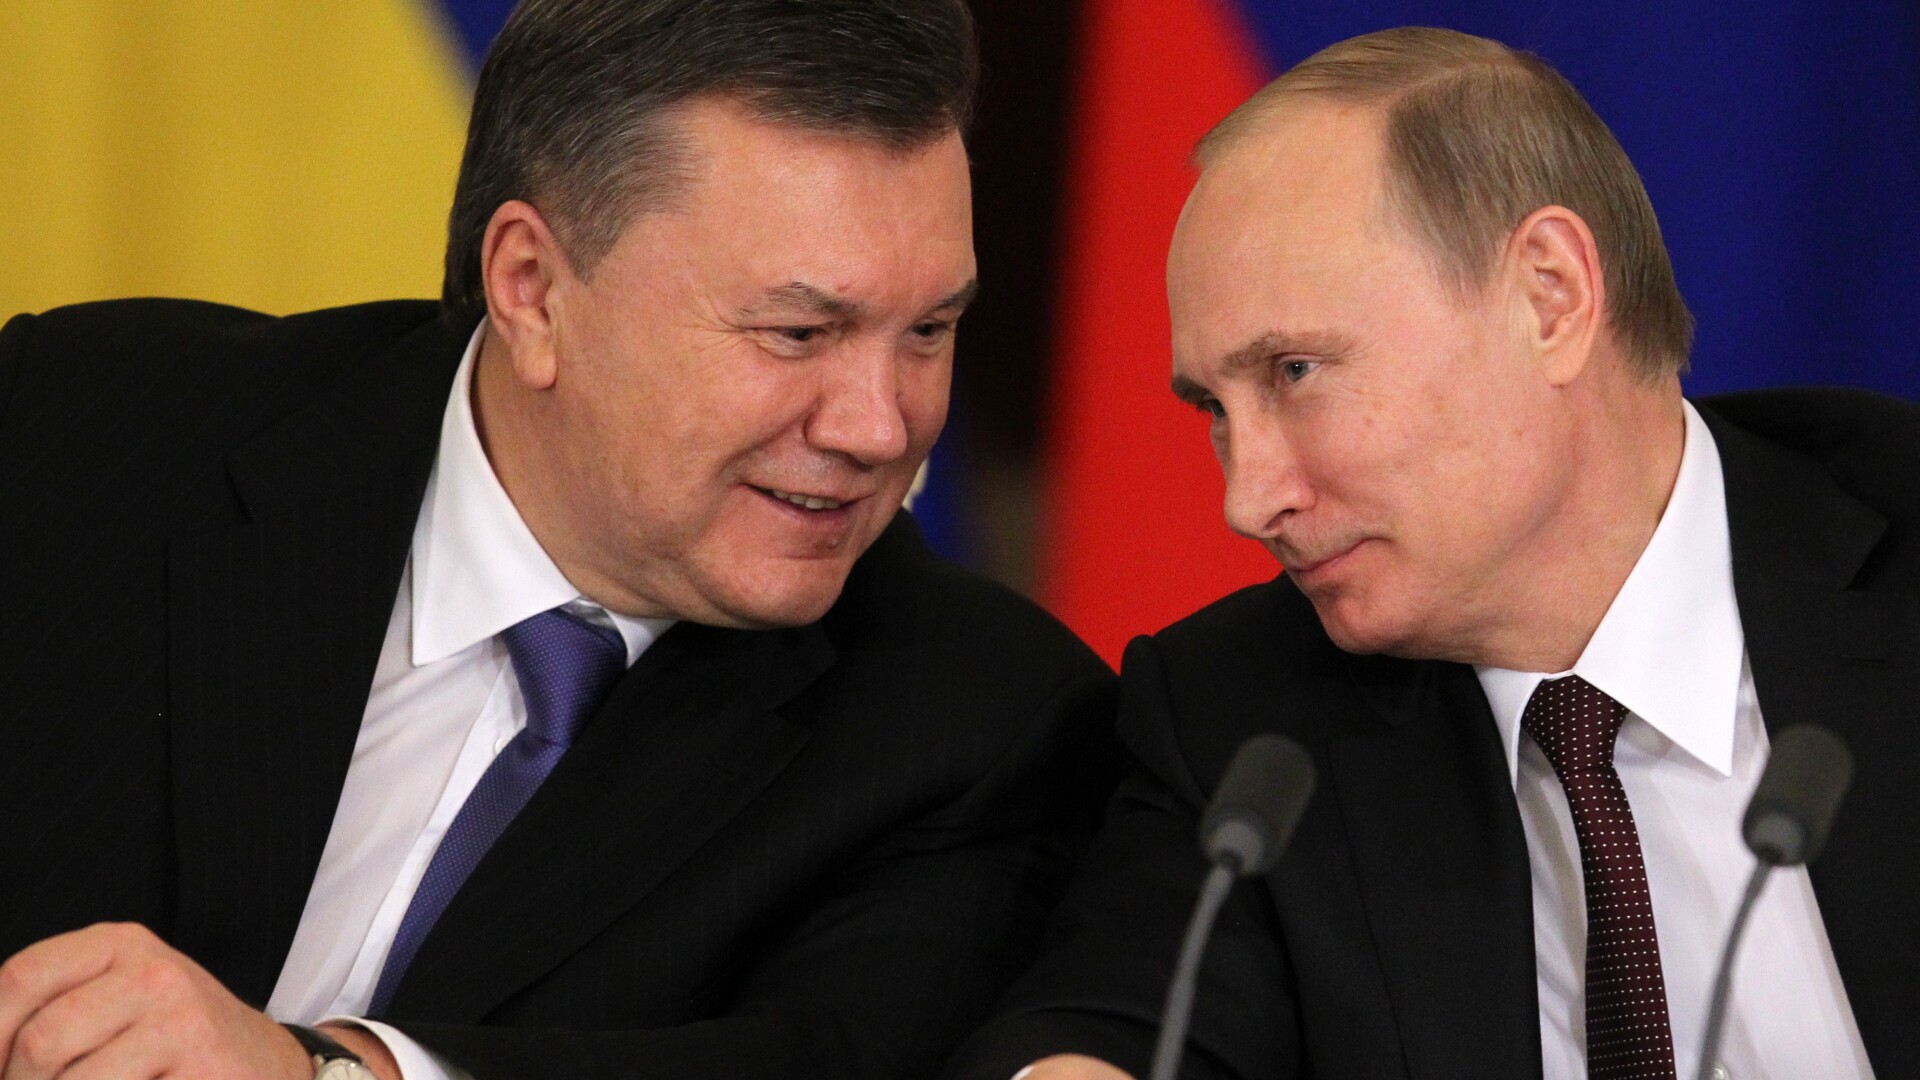 Viktor Ianukovici